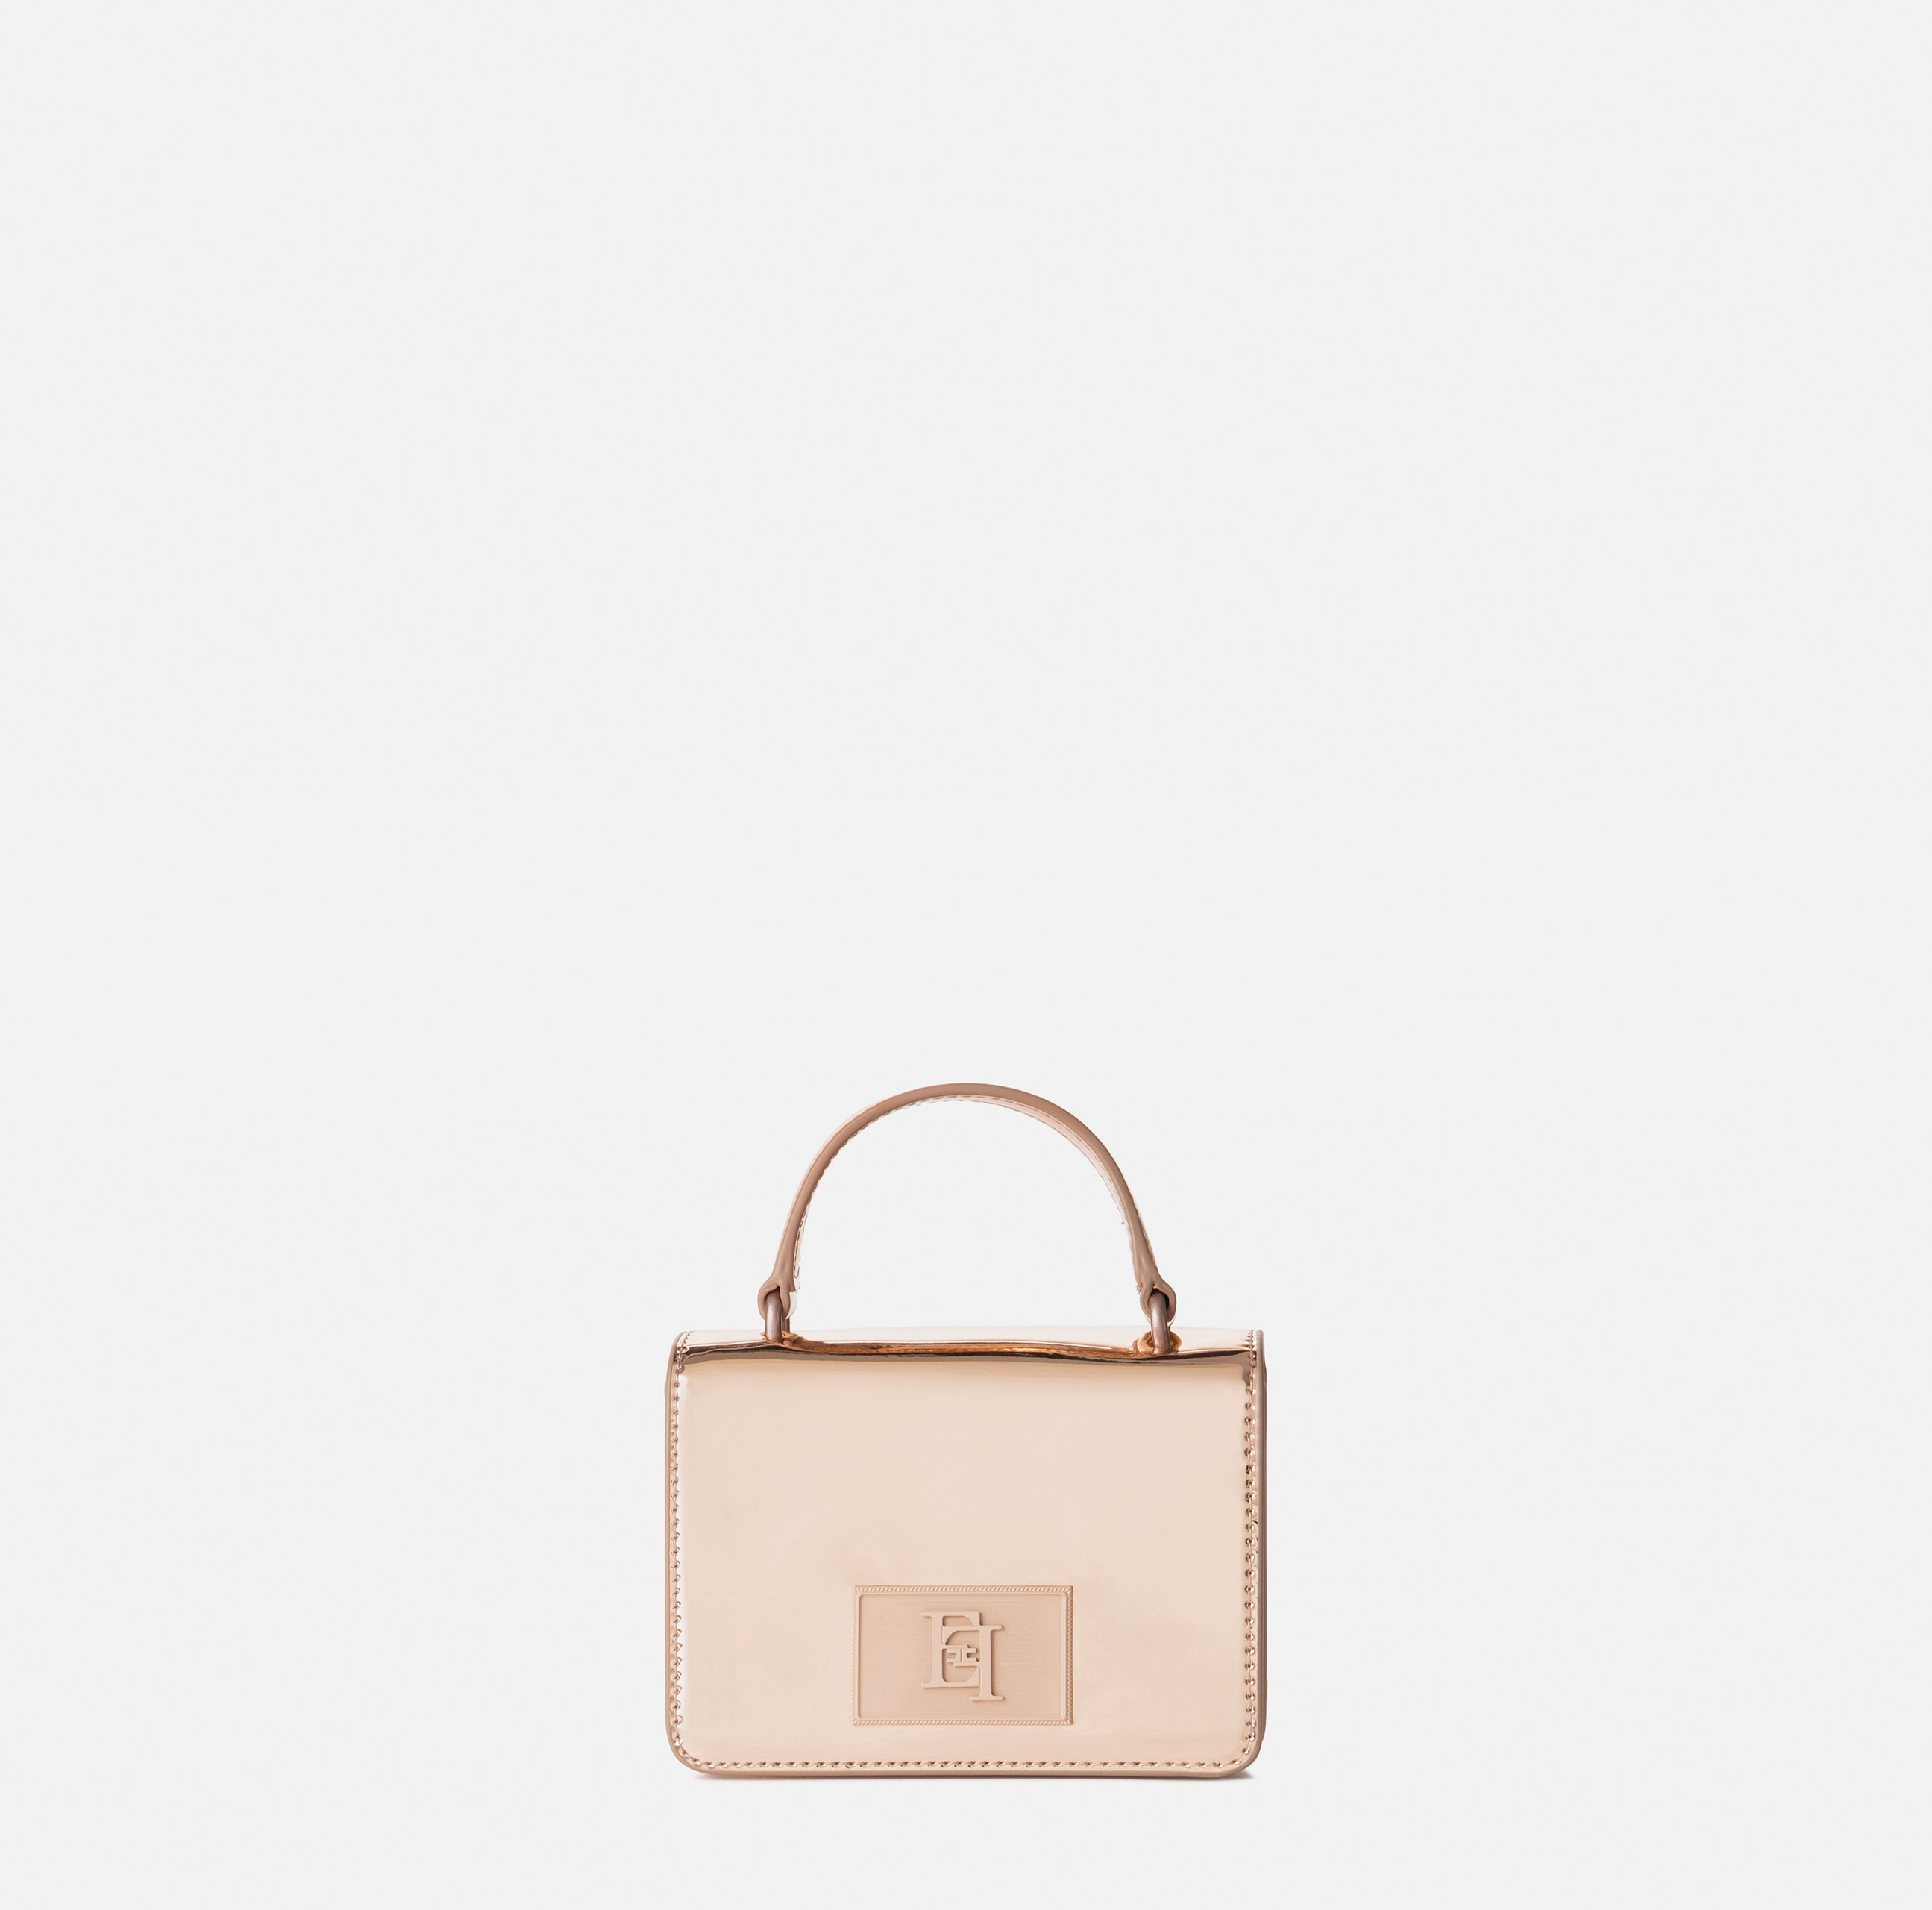 Mirrored mini bag with logo plaque - BORSE - Elisabetta Franchi